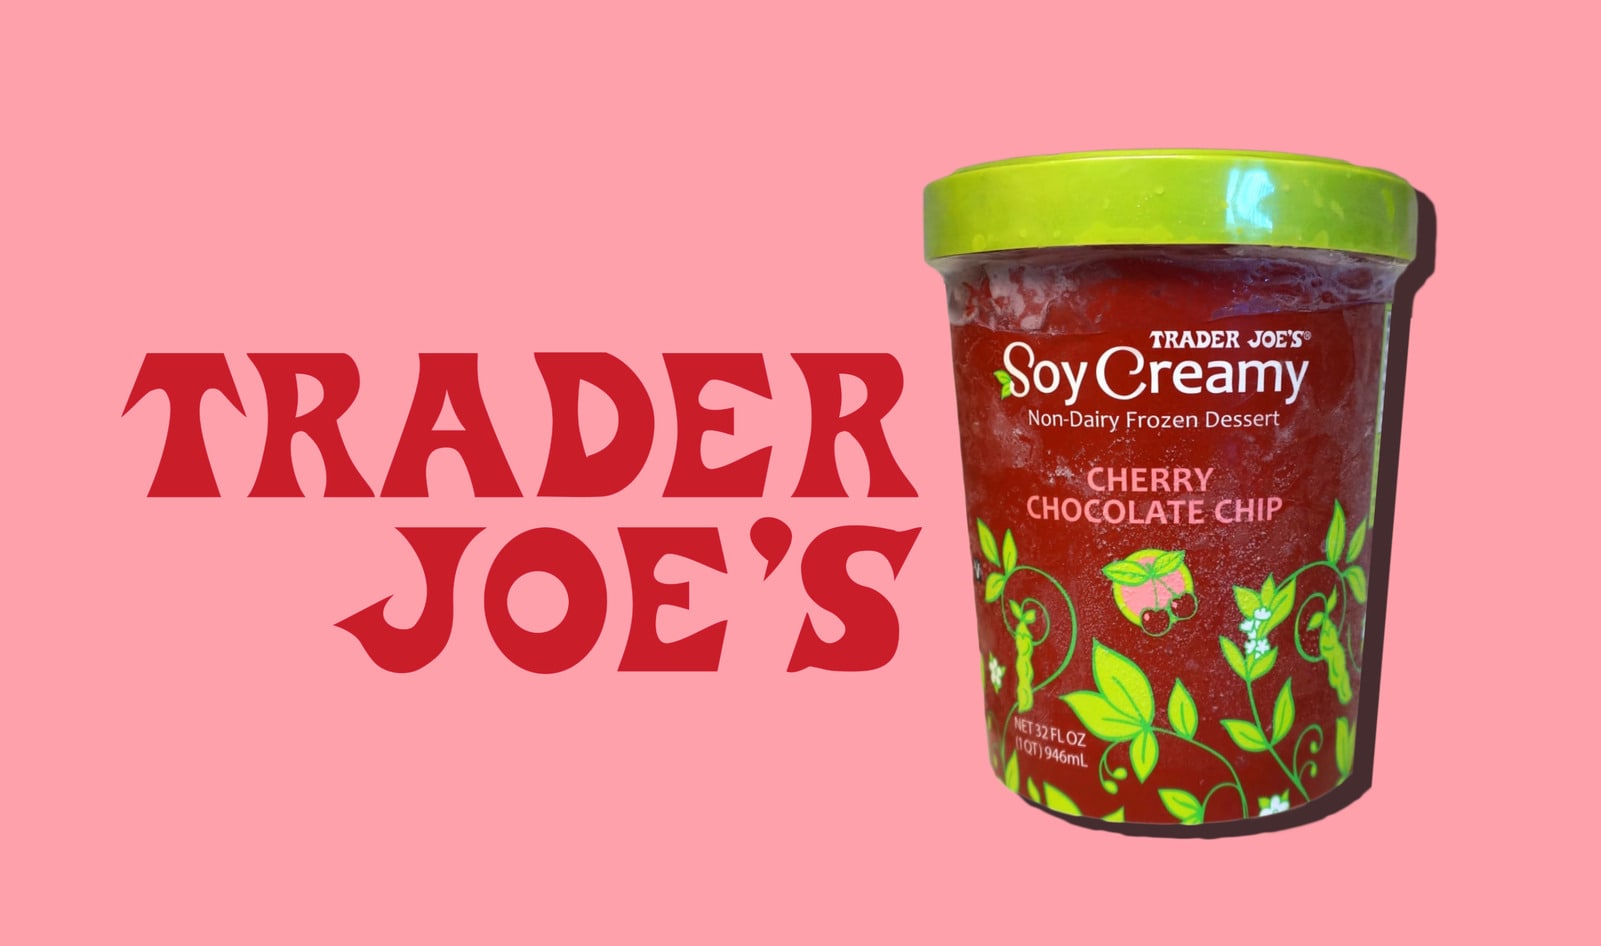 Vegan Cherry Chocolate Chip Ice Cream Is Back at Trader Joe’s